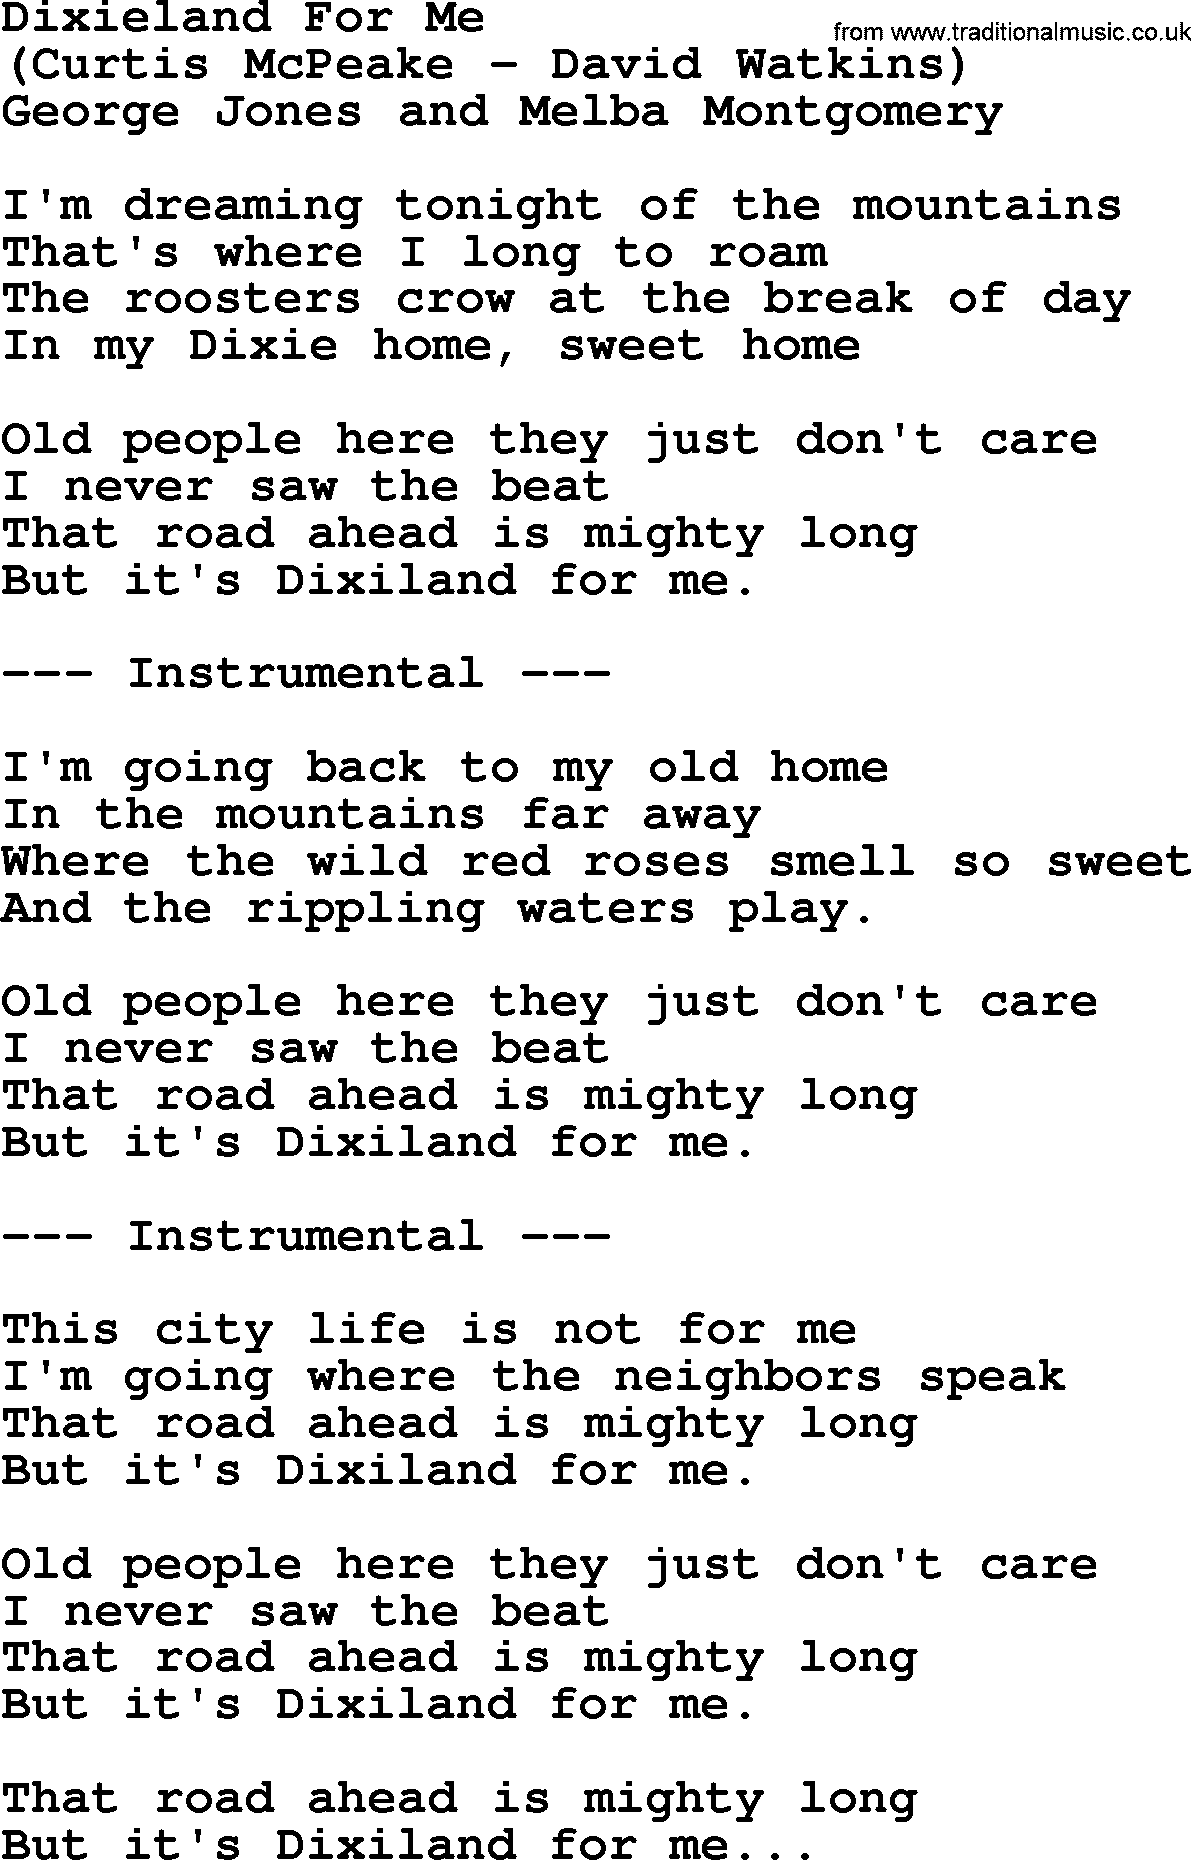 George Jones song: Dixieland For Me, lyrics